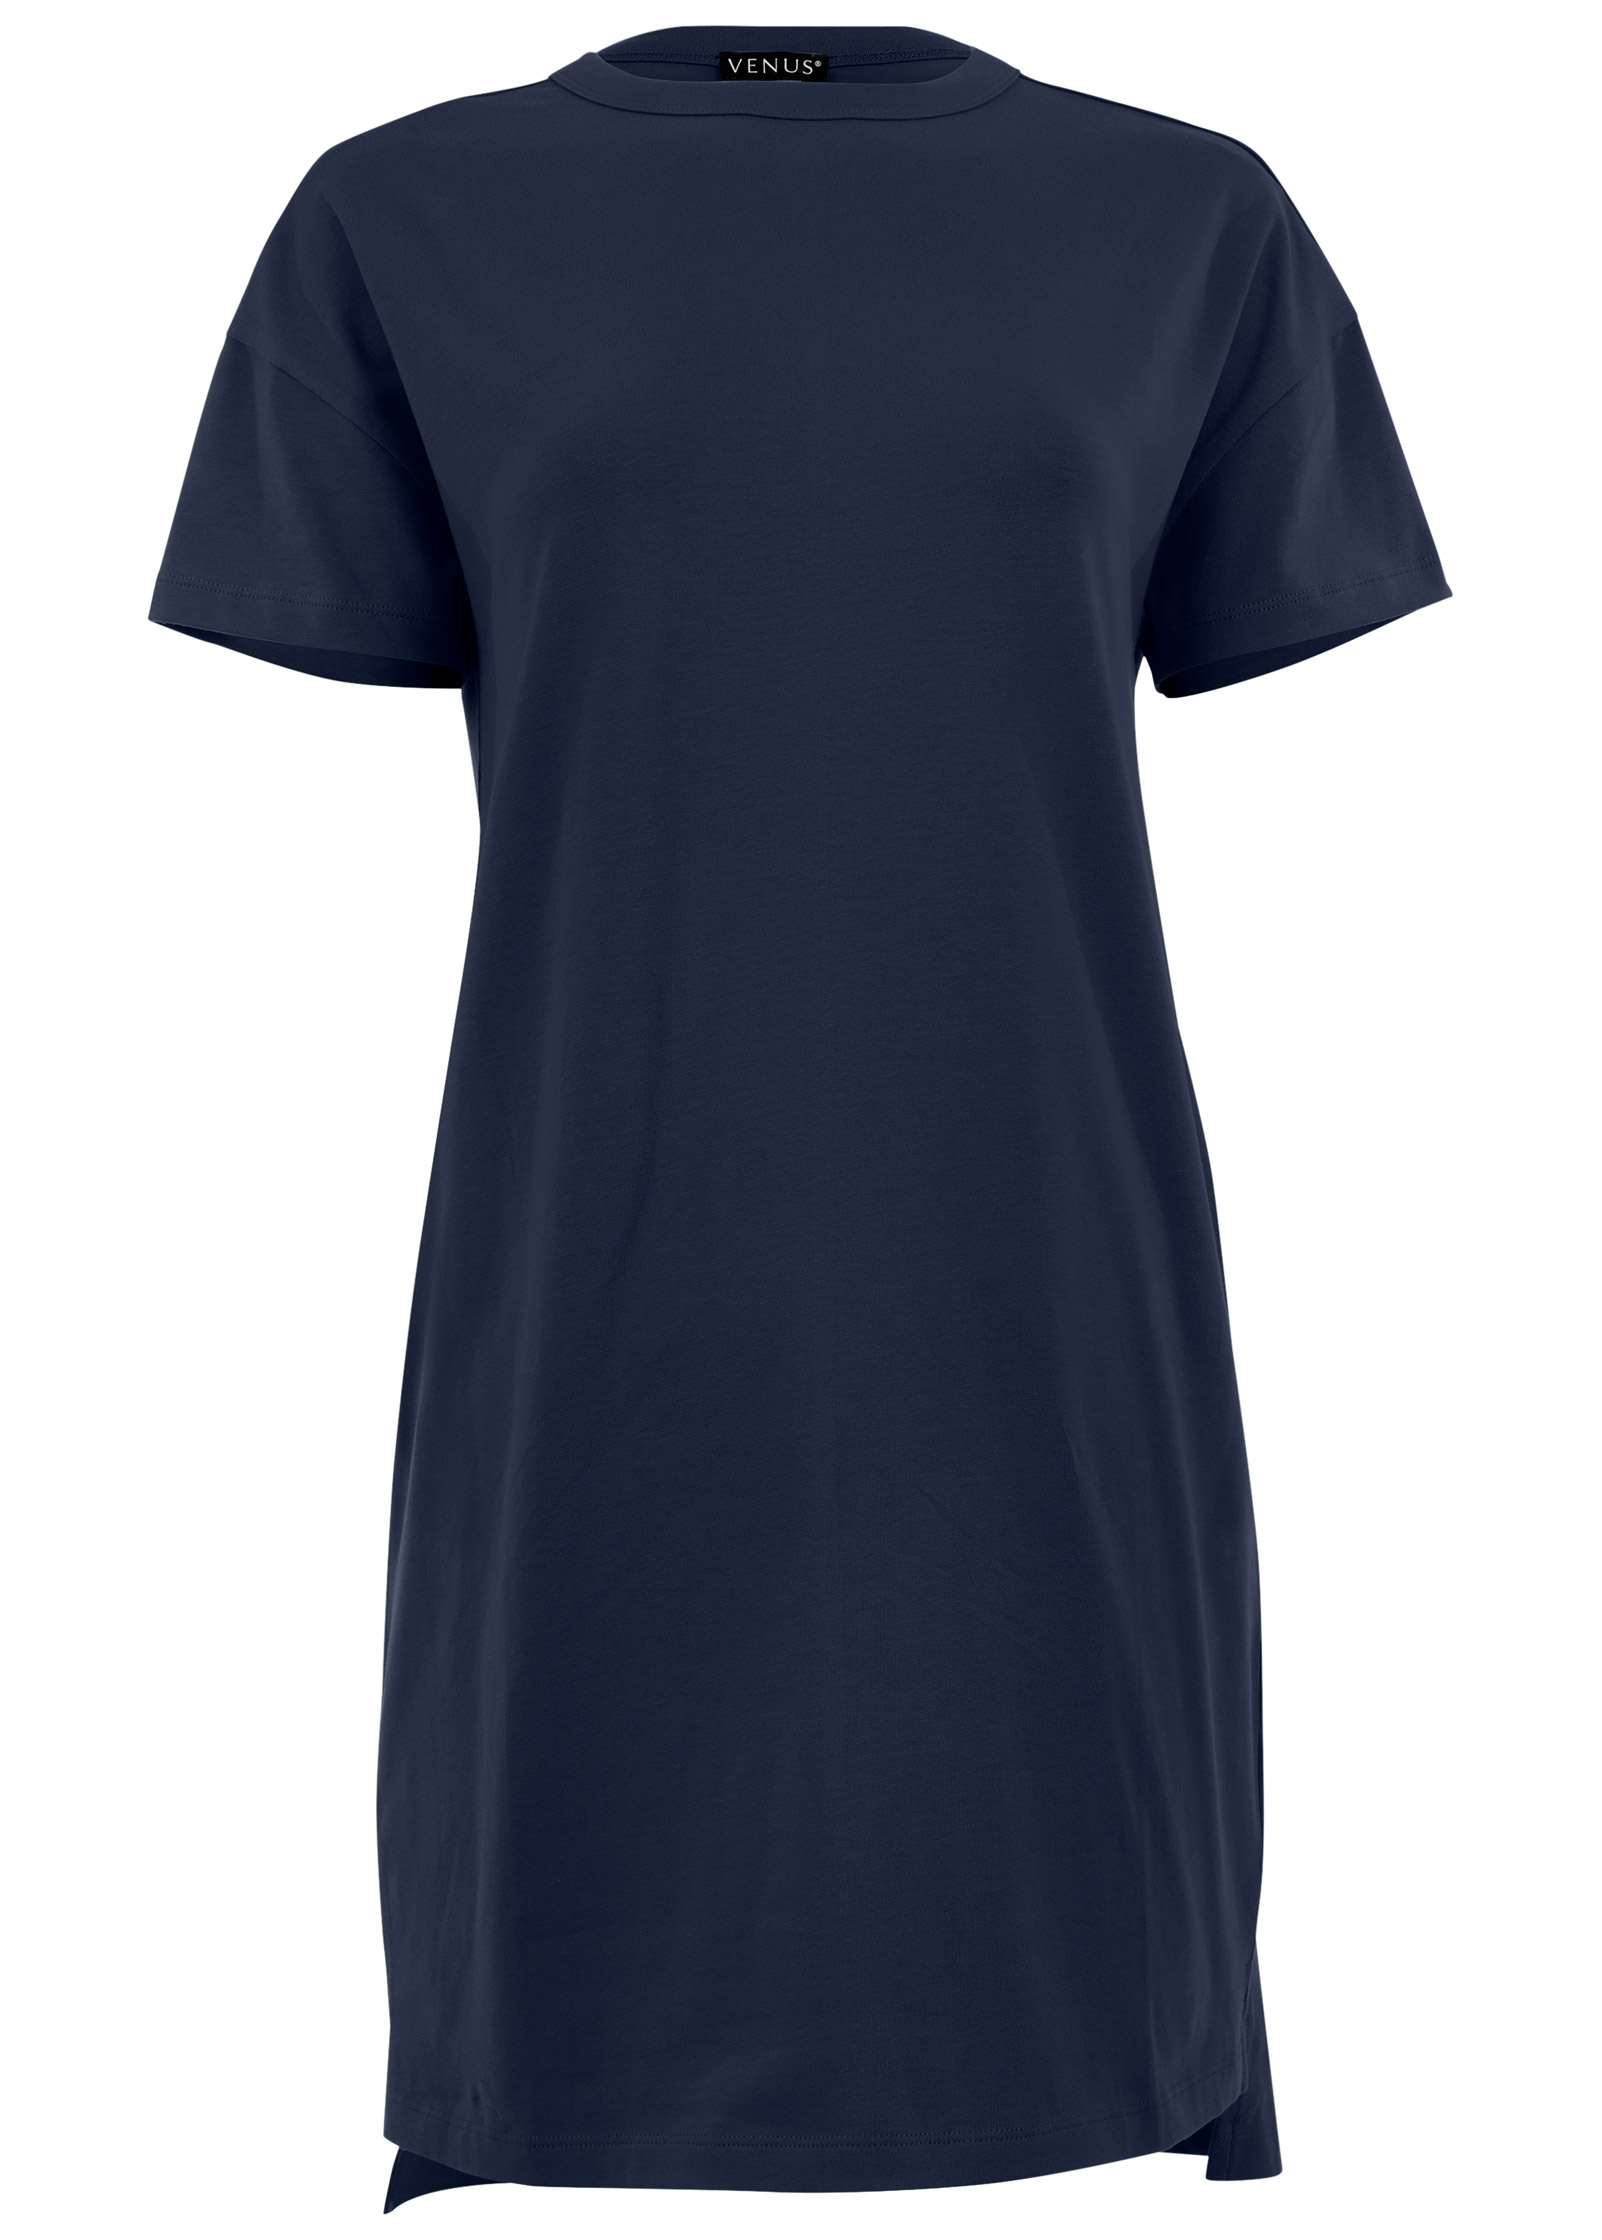 T-Shirt Dress in Navy | VENUS